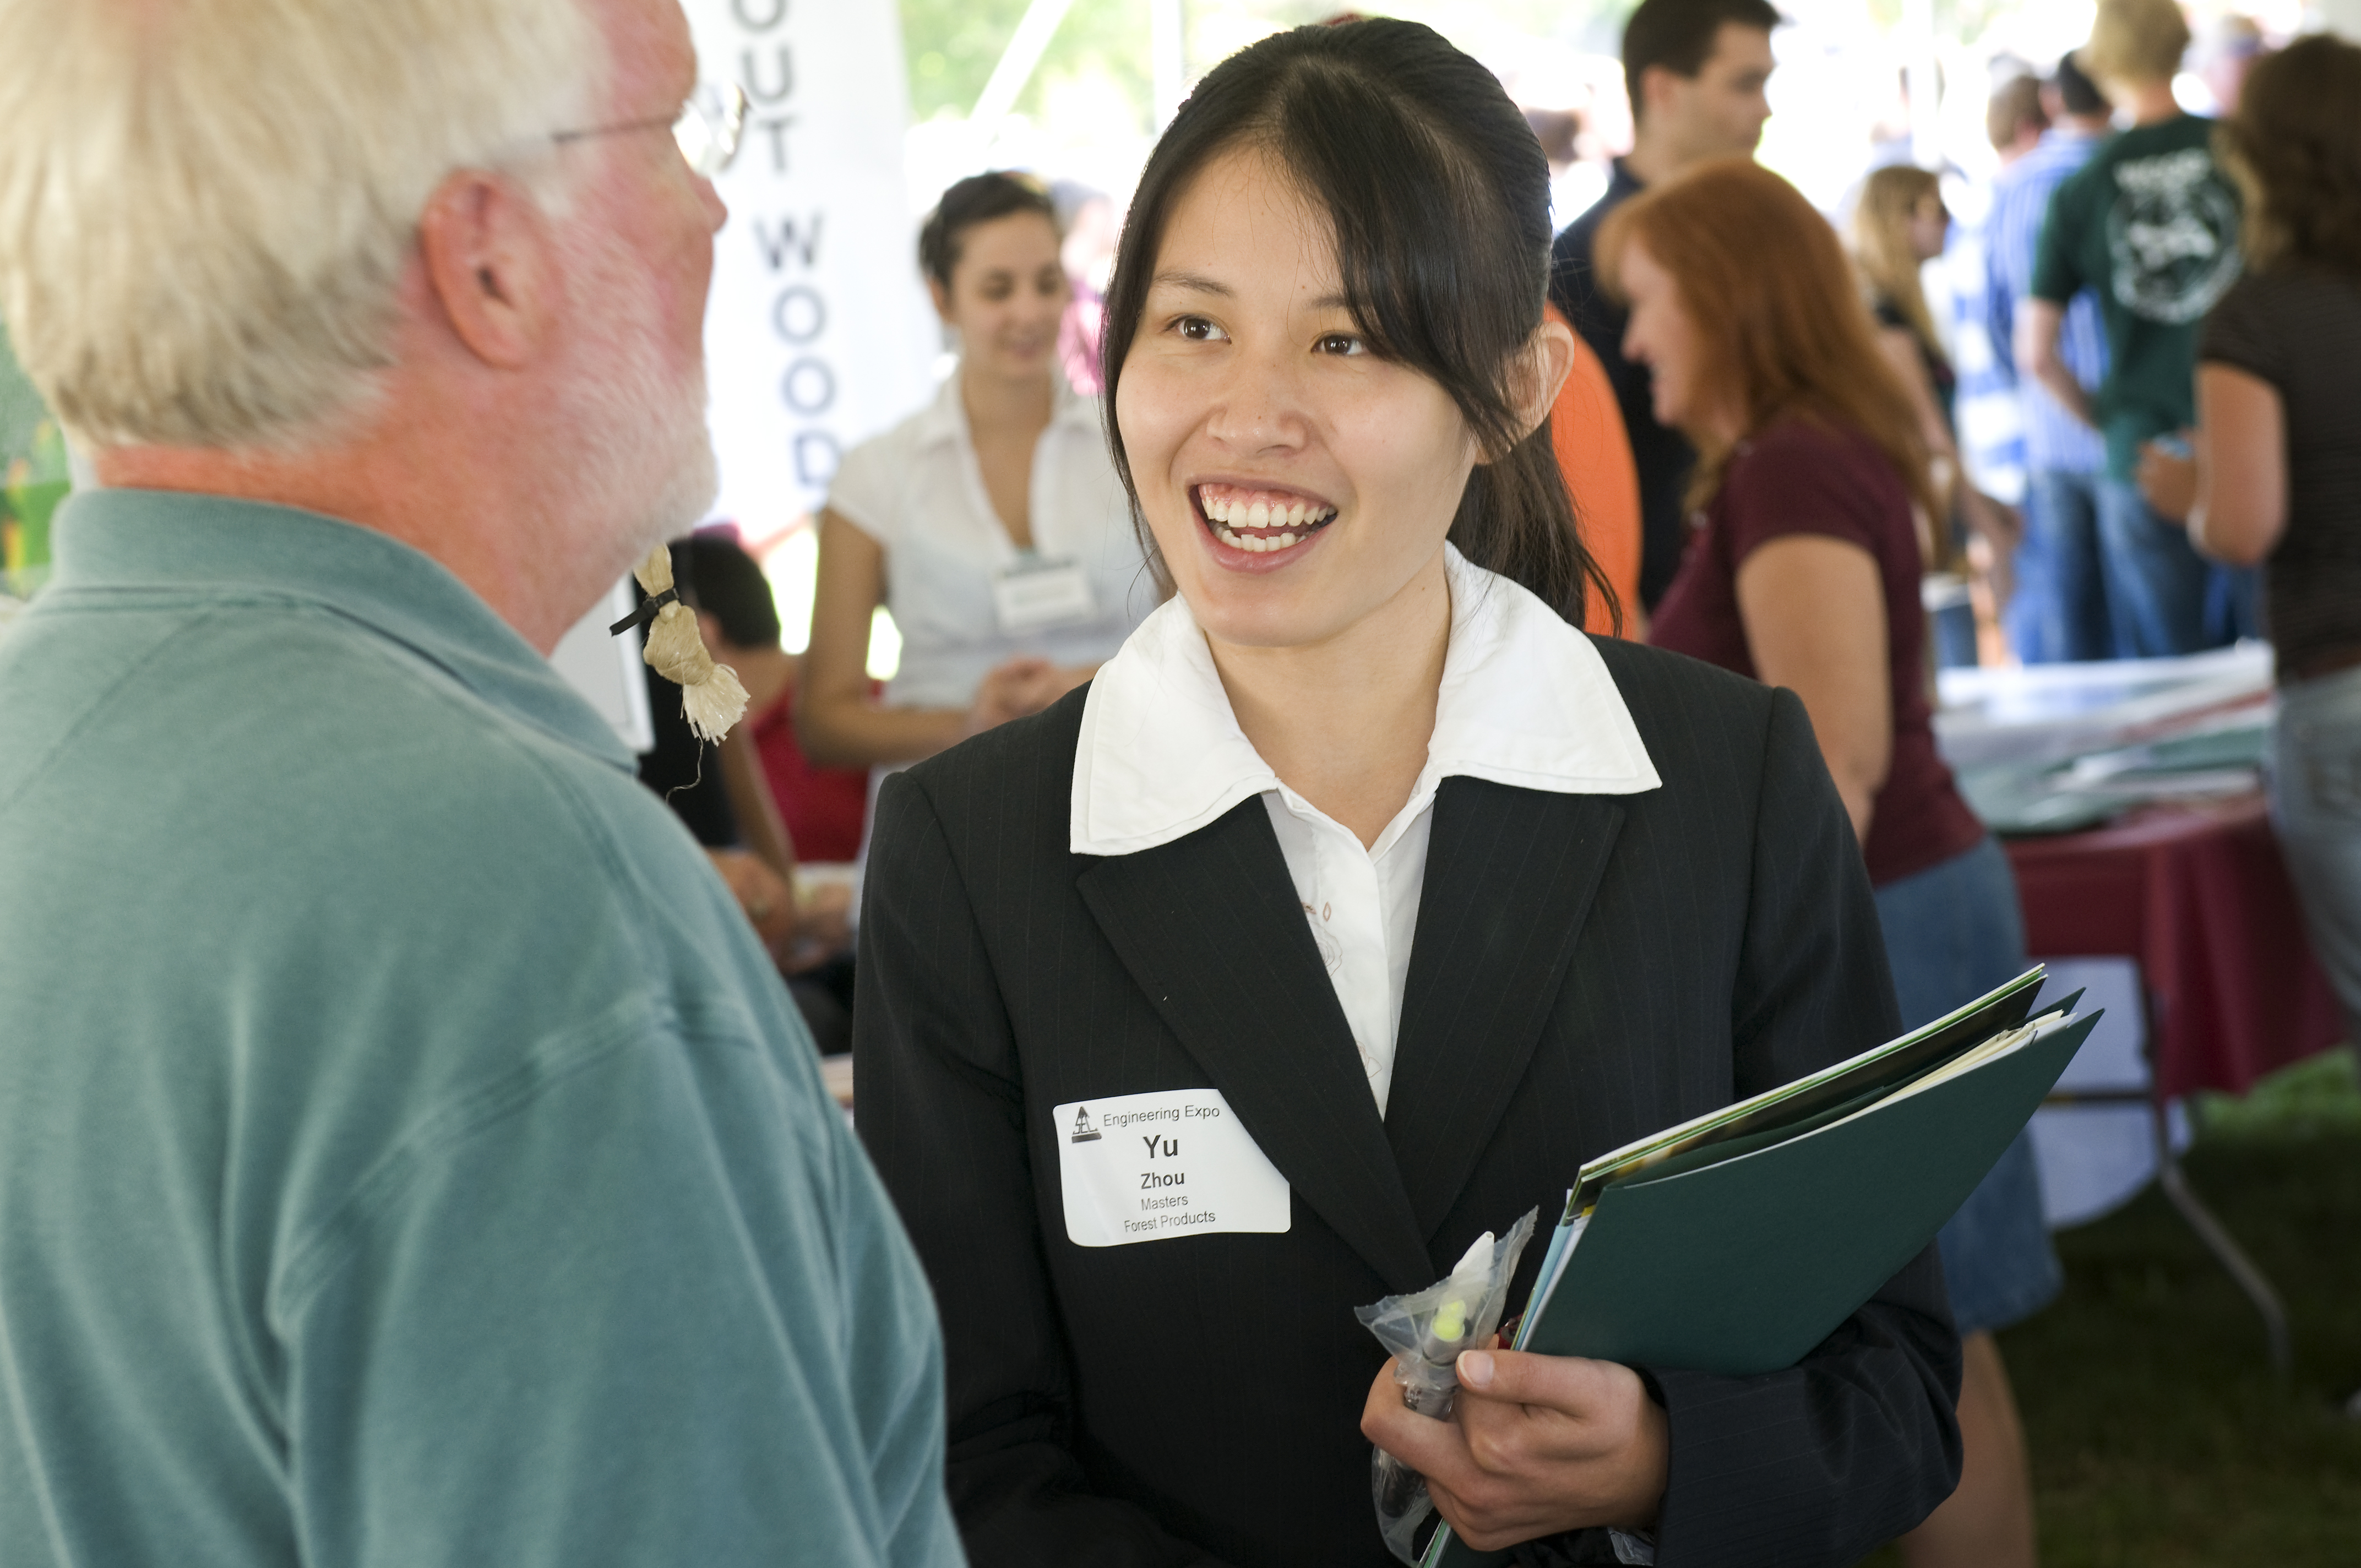 Student talks to a recruiter at a job fair